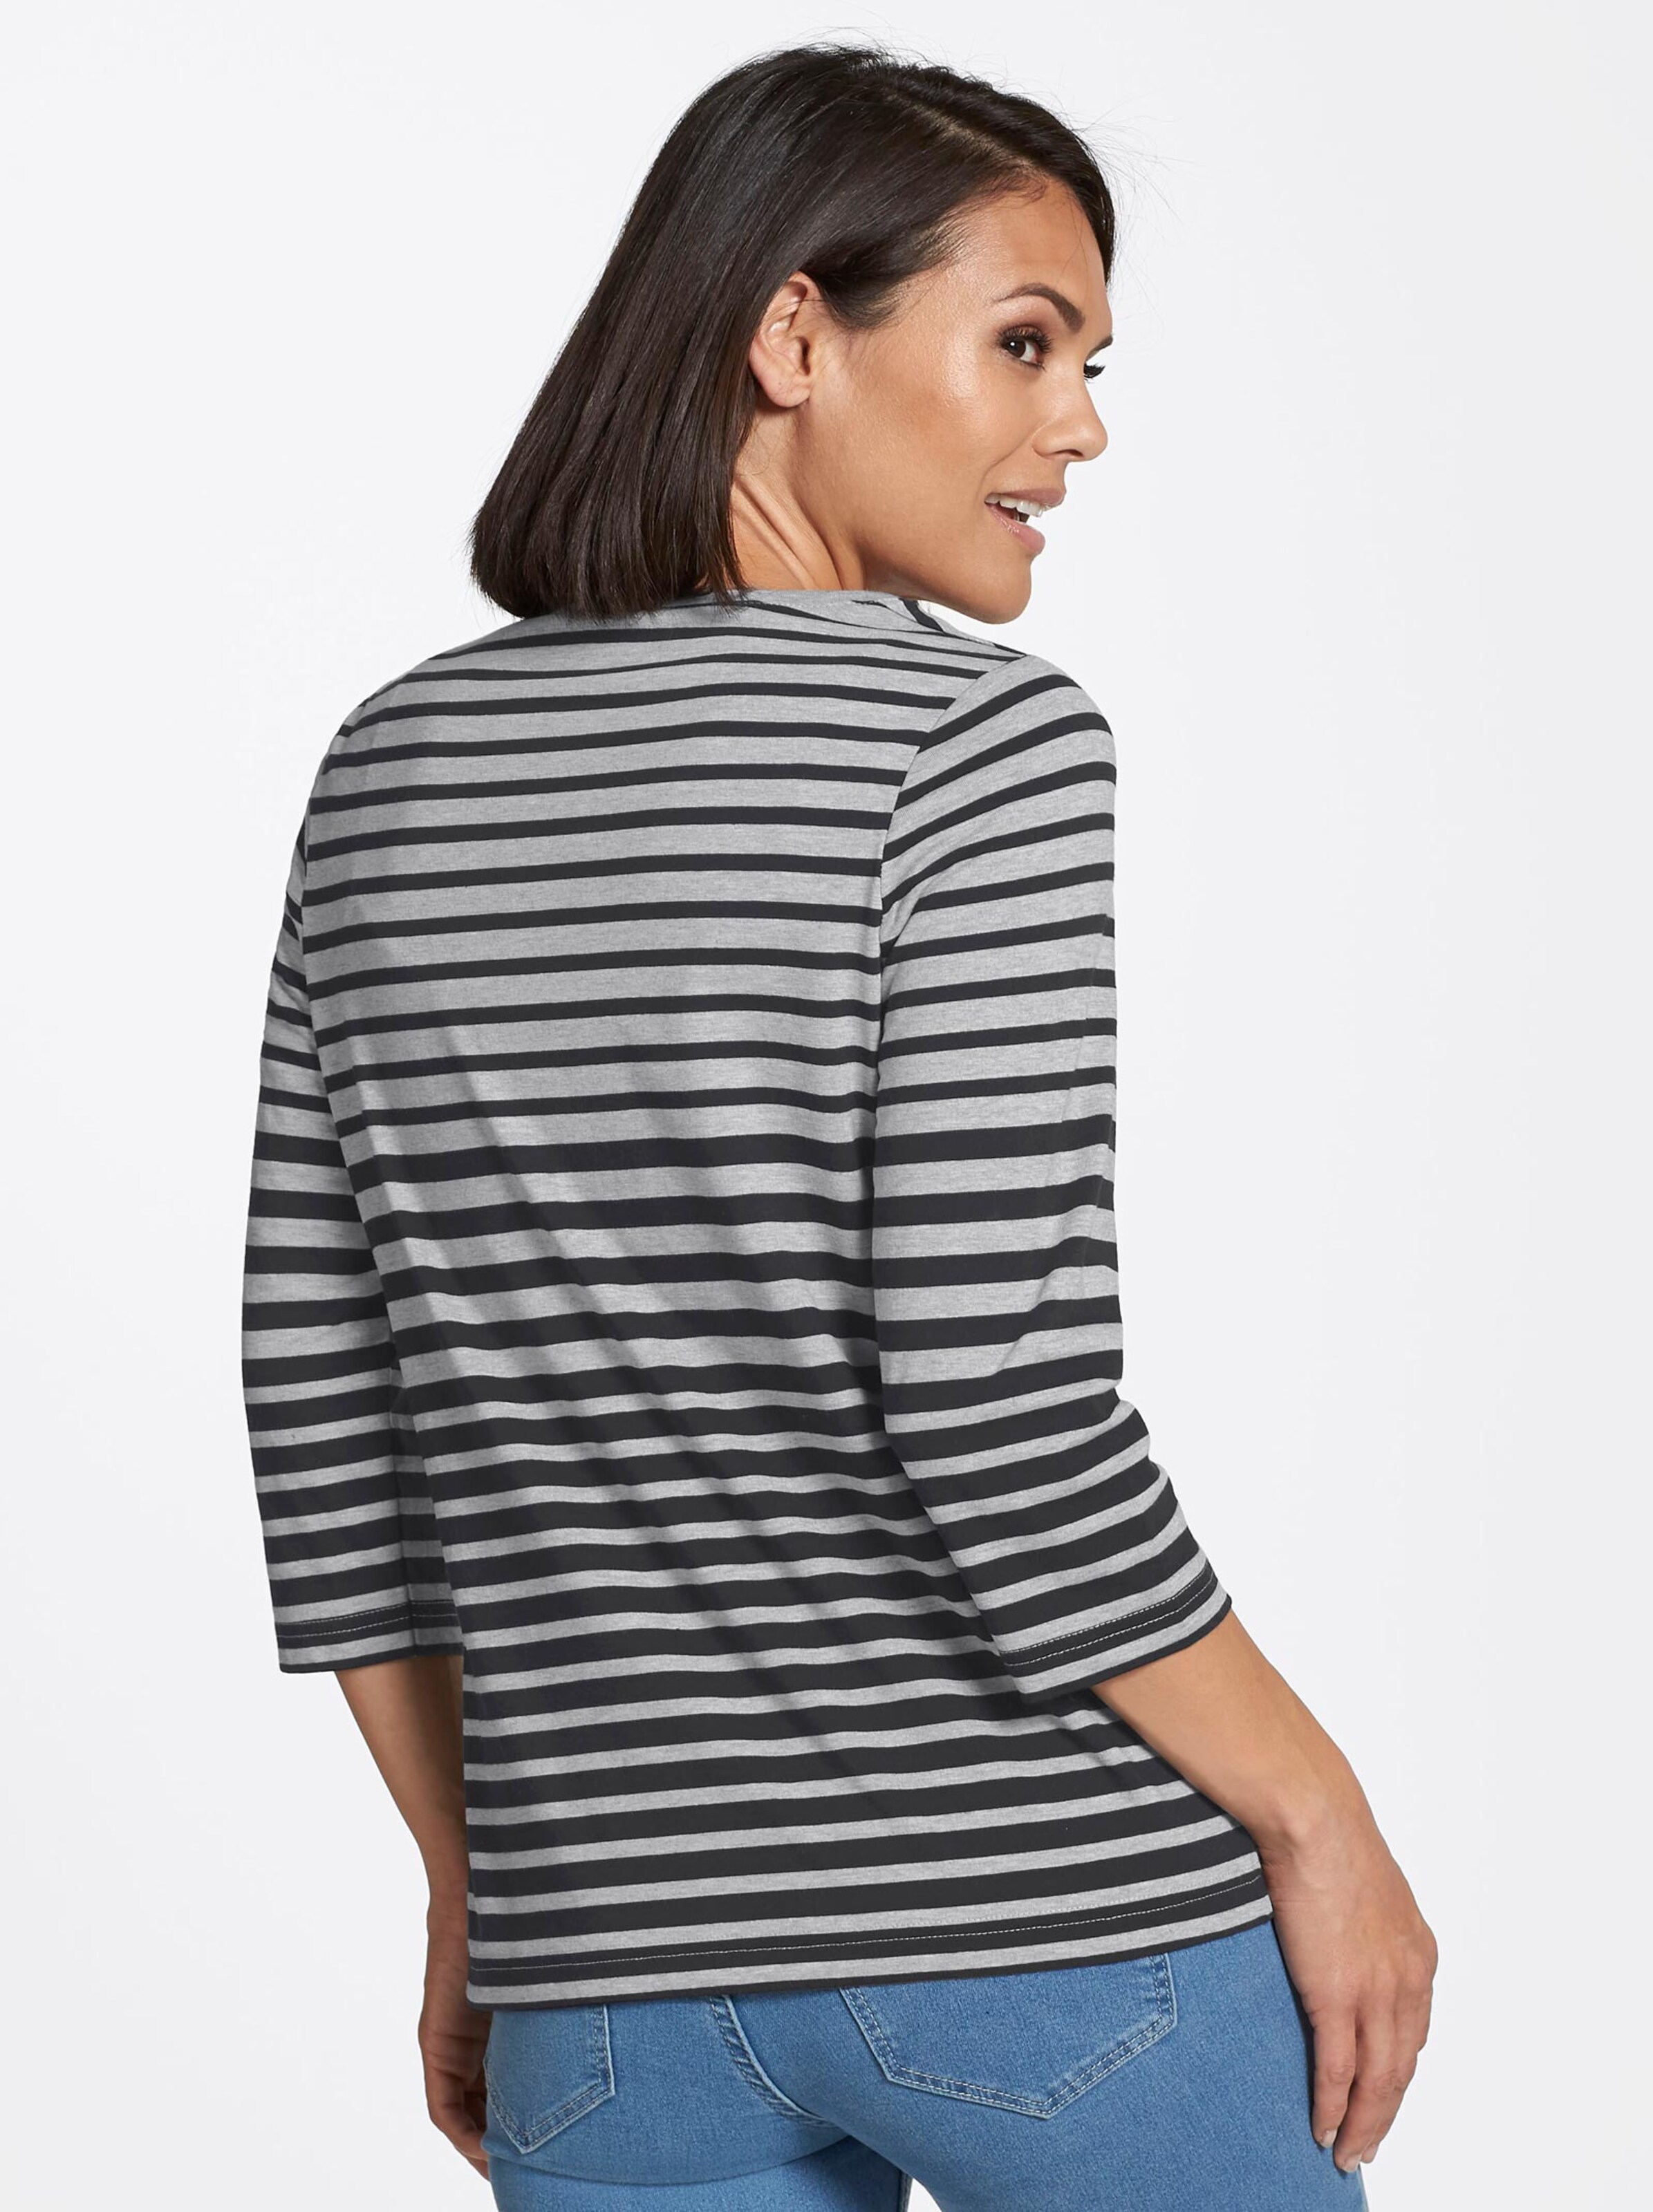 Damenmode Shirts 3/4-Arm-Shirt in grau-schwarz-geringelt 